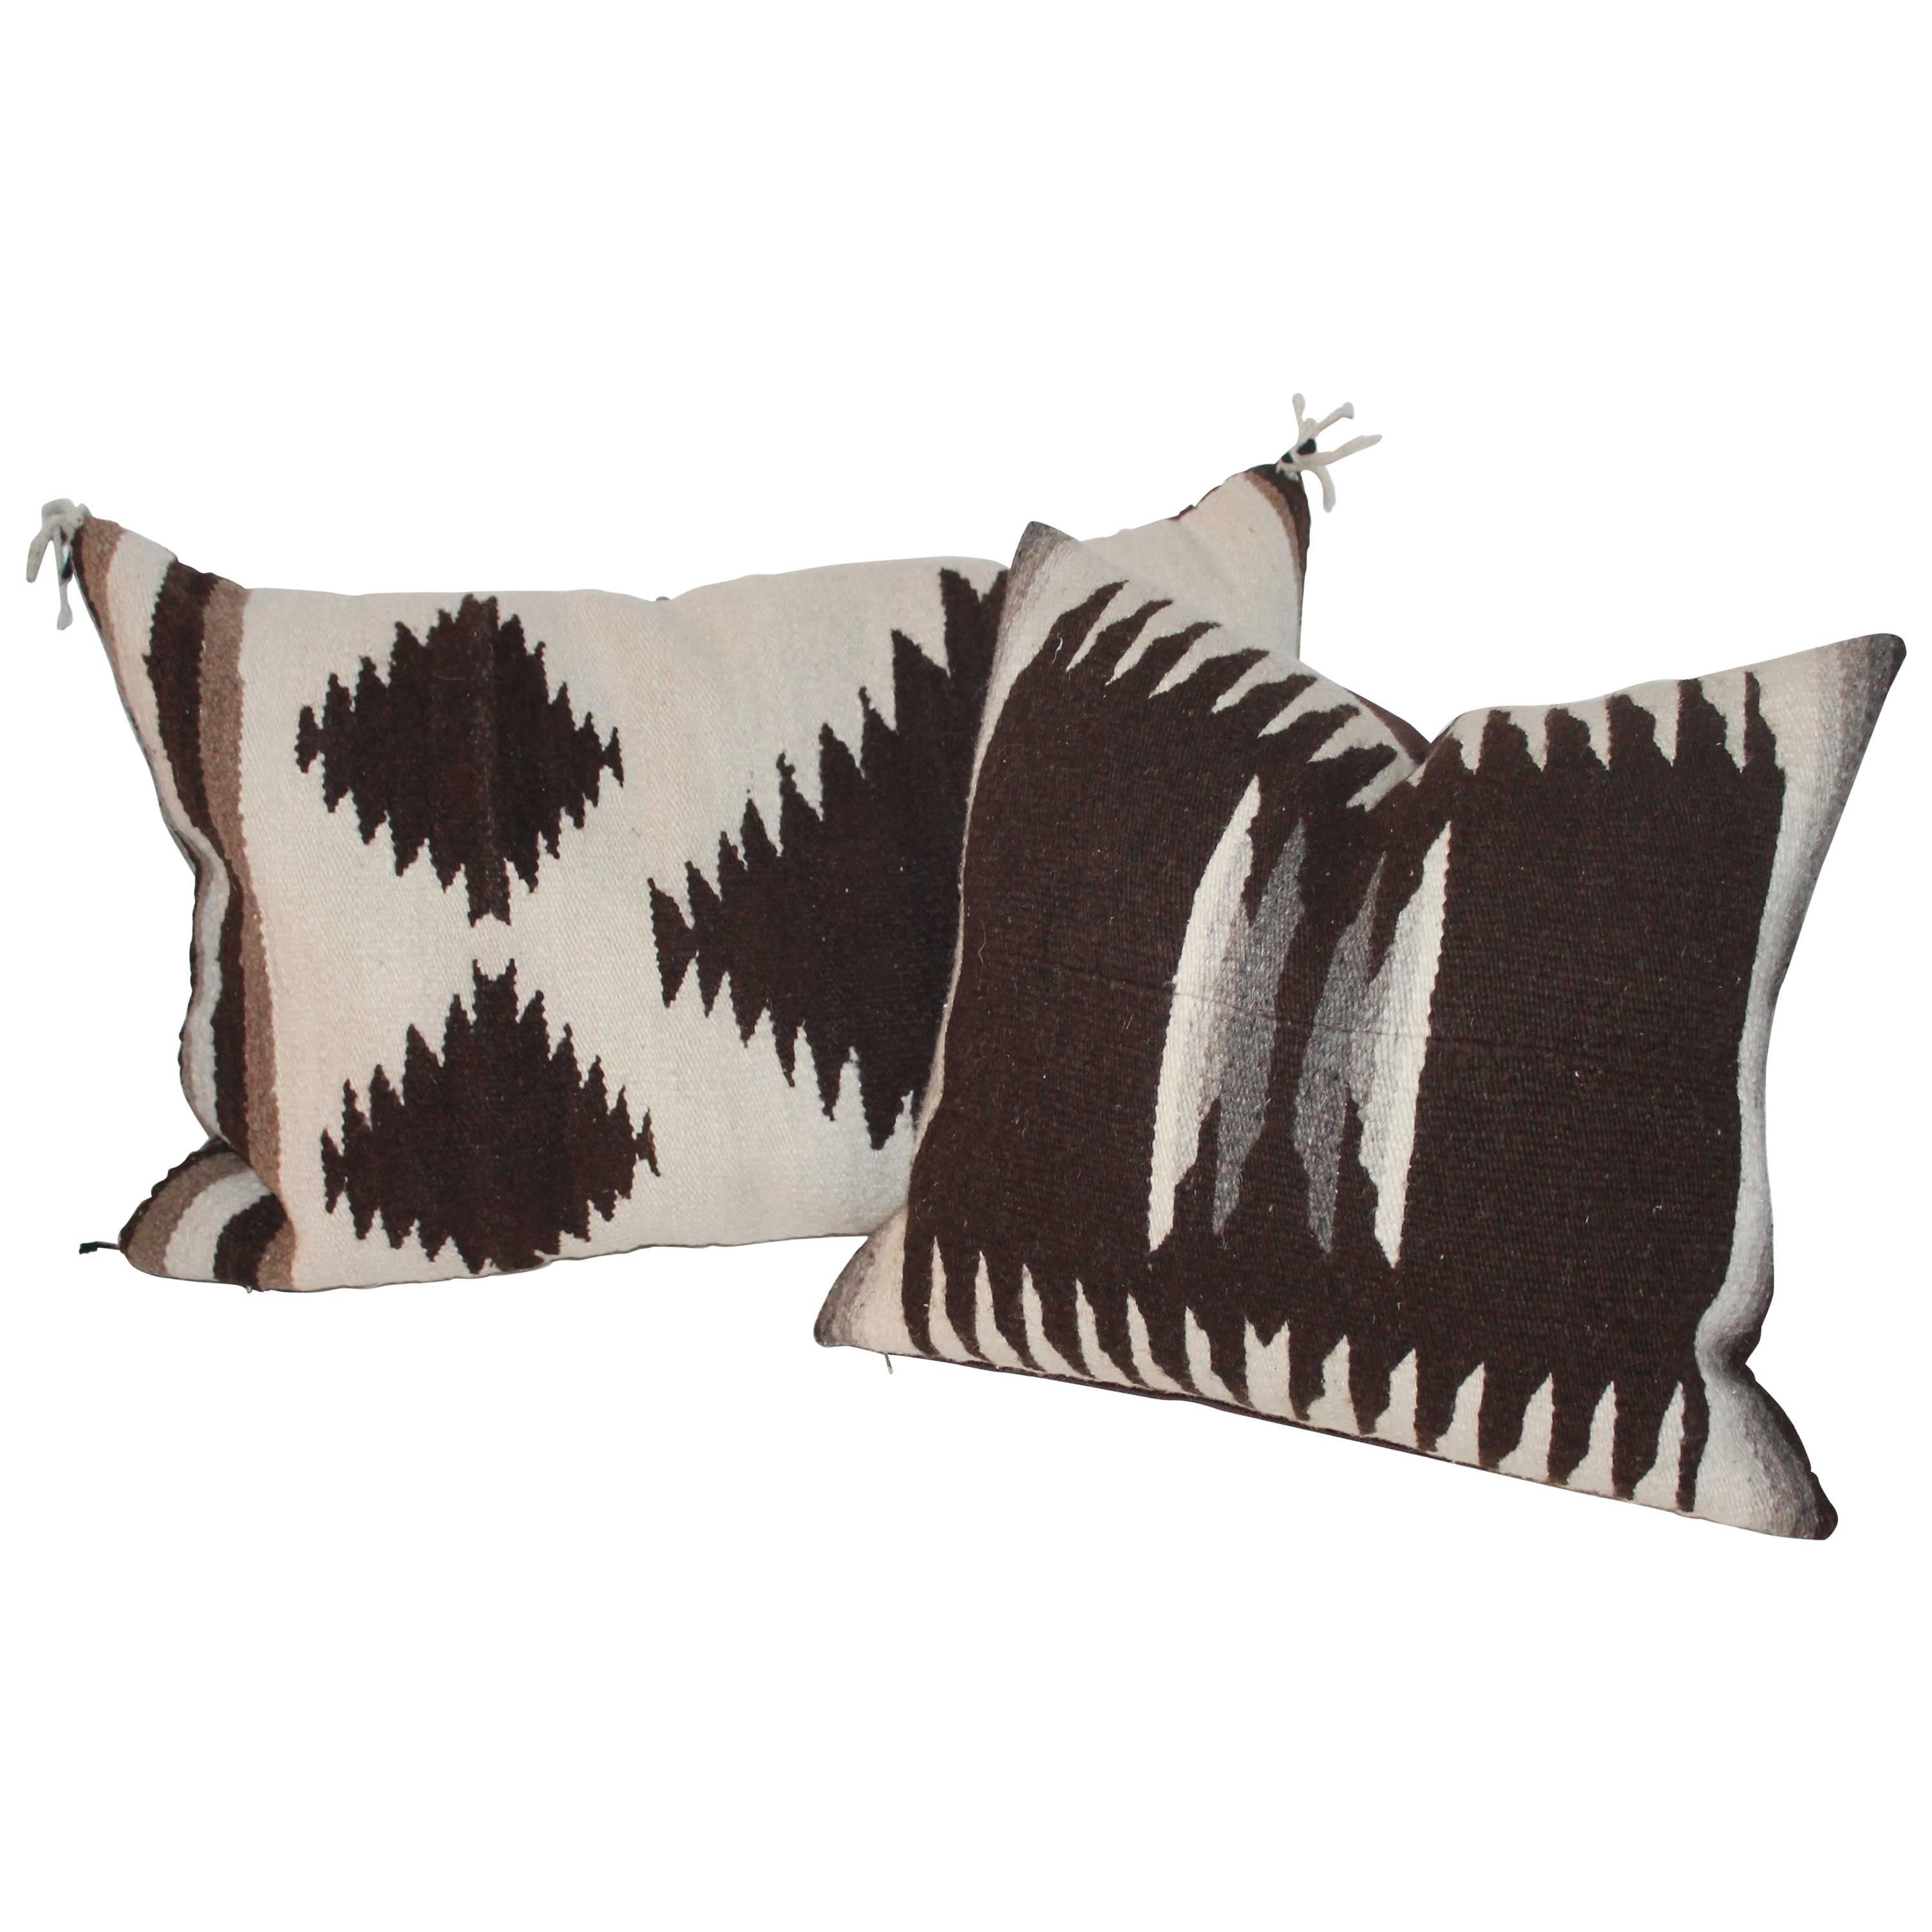  Navajo Indian Weaving Pillows /2